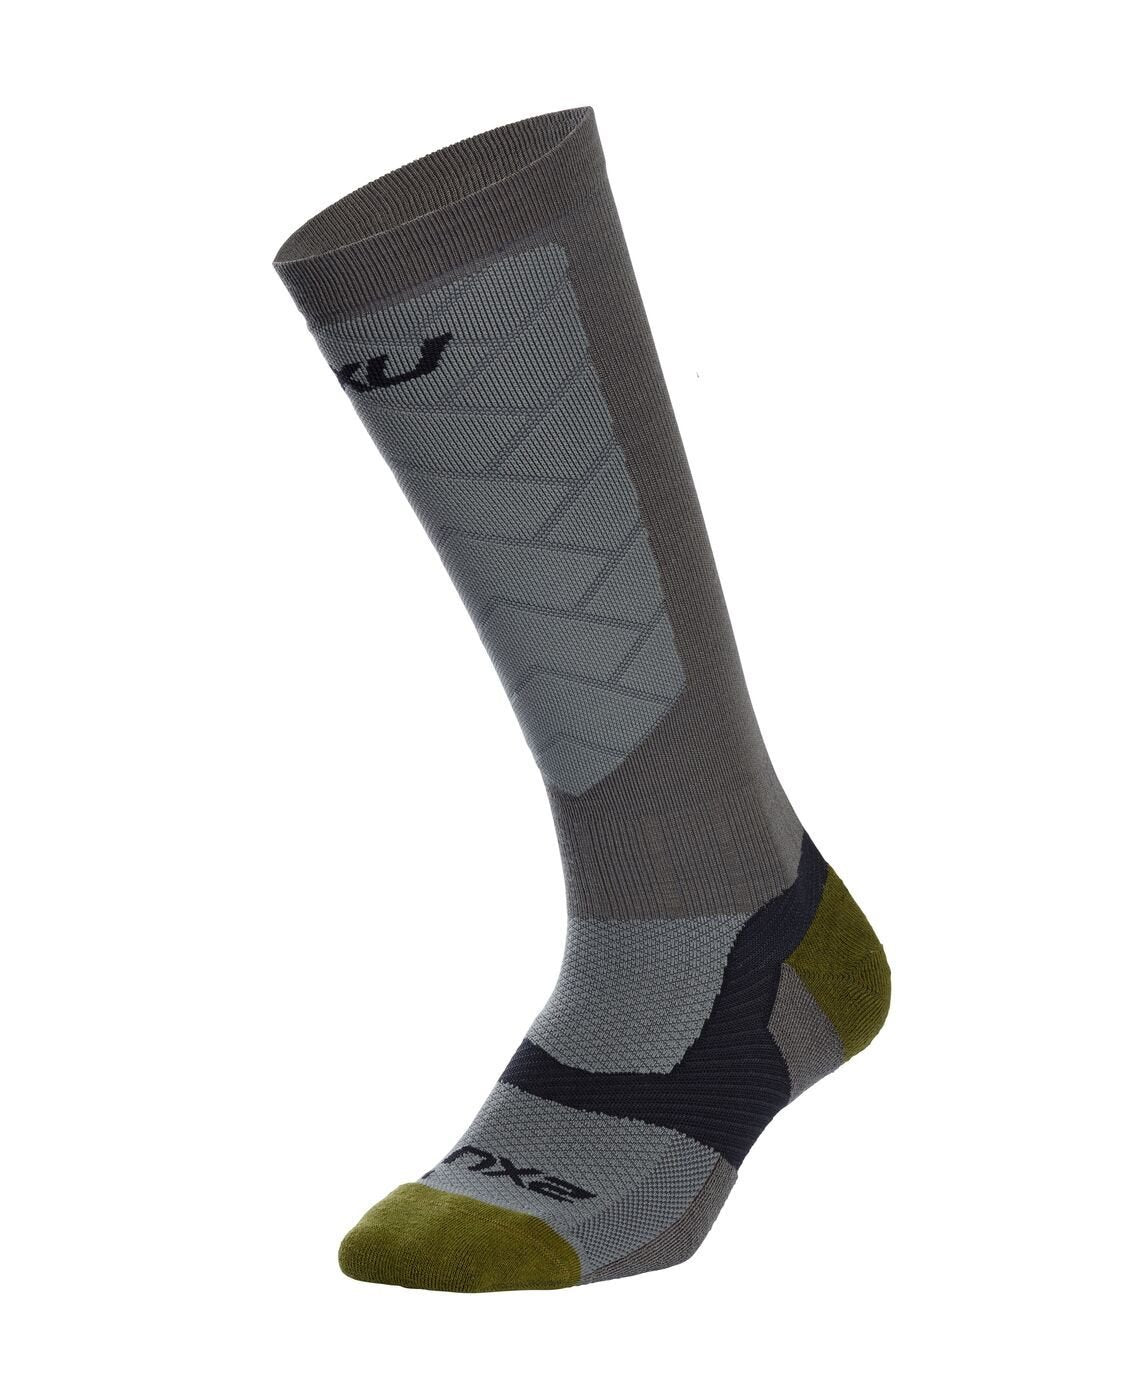 Vectr Alpine Compression Socks